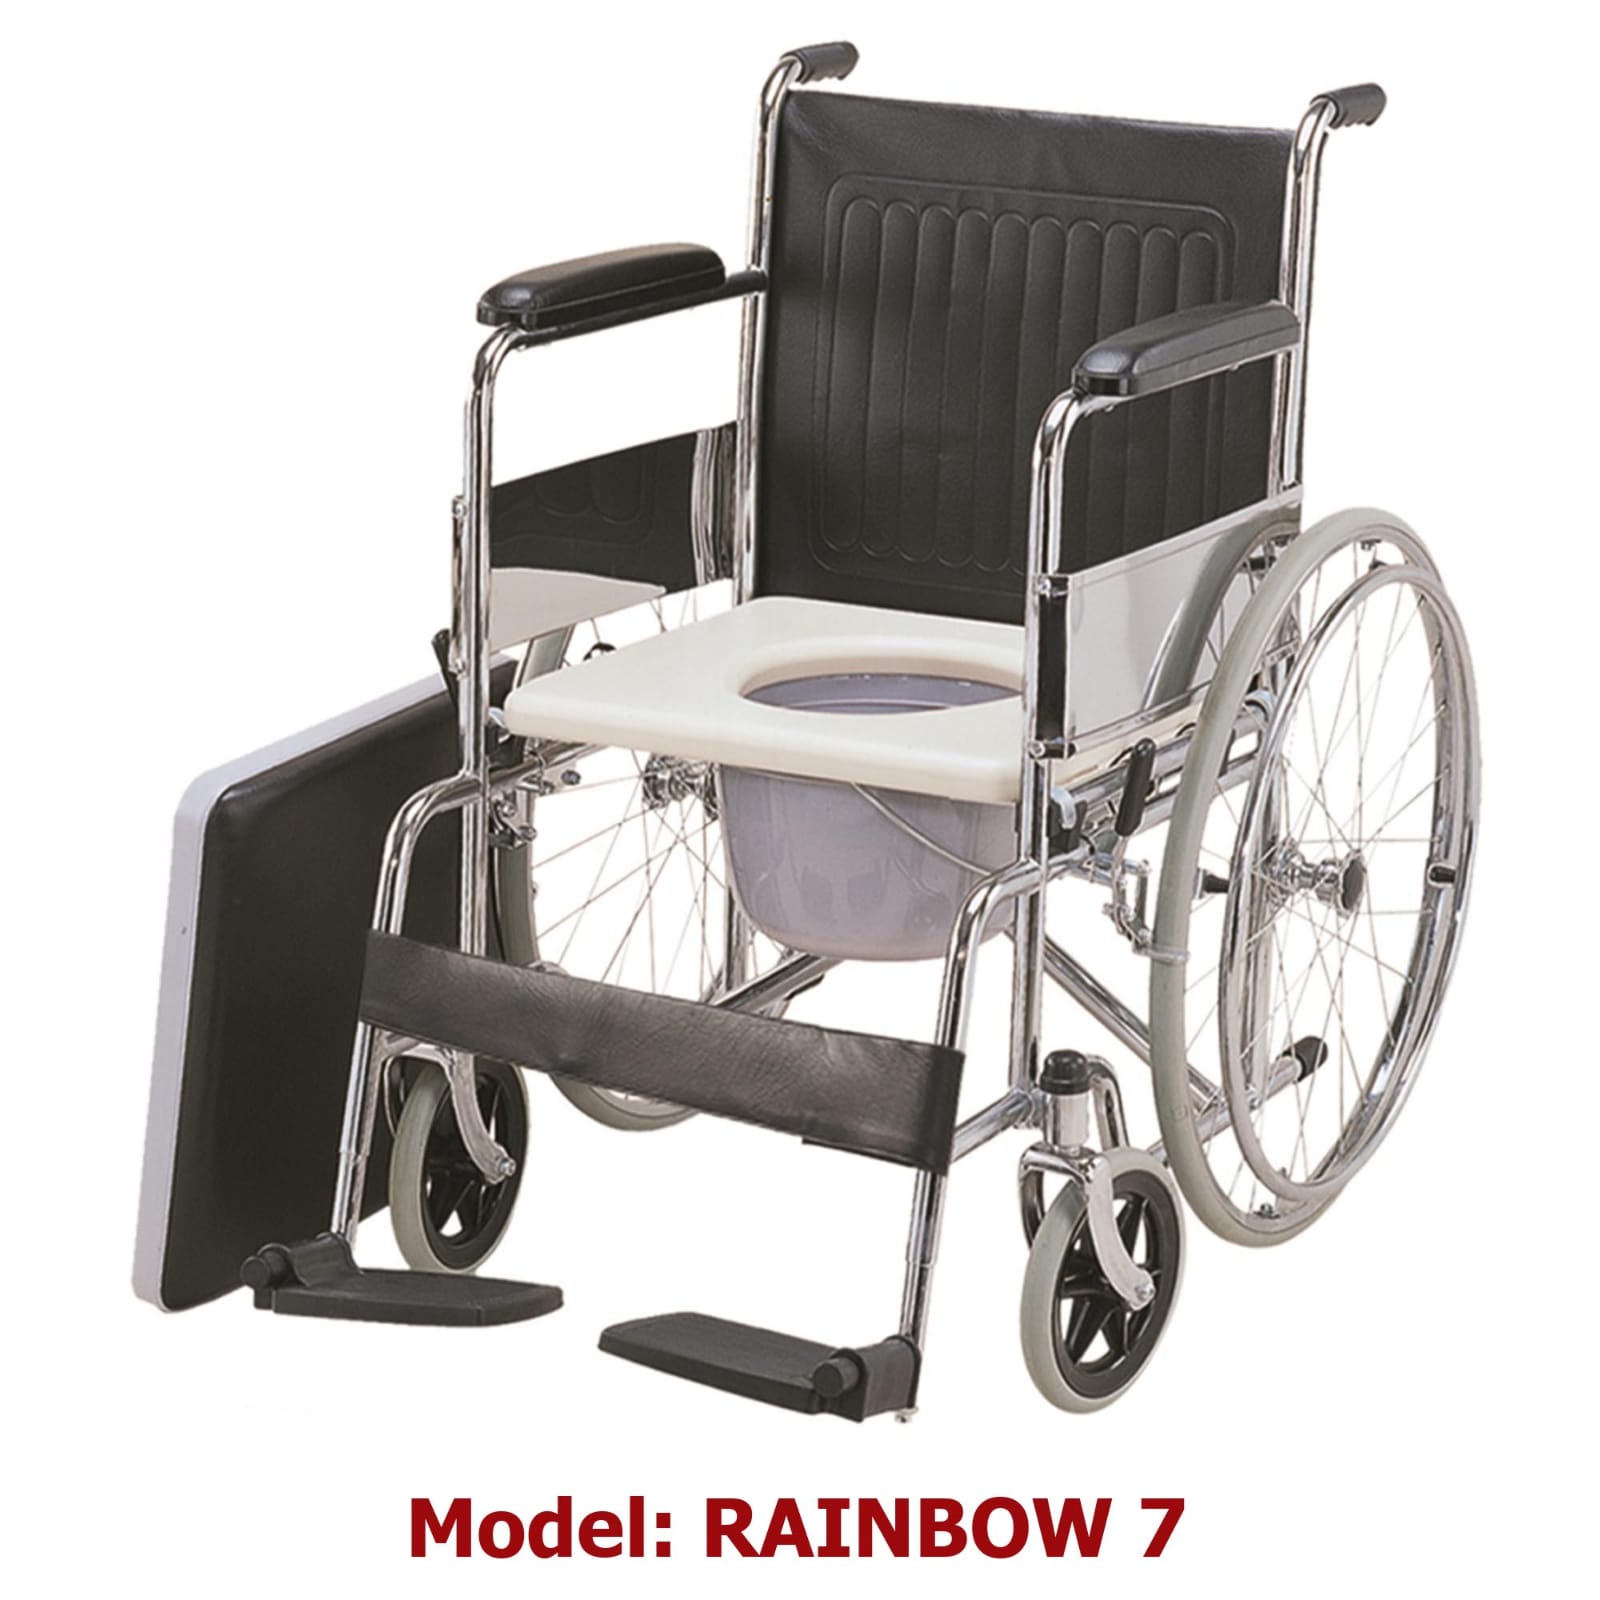 Karma Commode Wheelchair Rainbow 7 On Sale Suppliers, Service Provider in Adarsh nagar